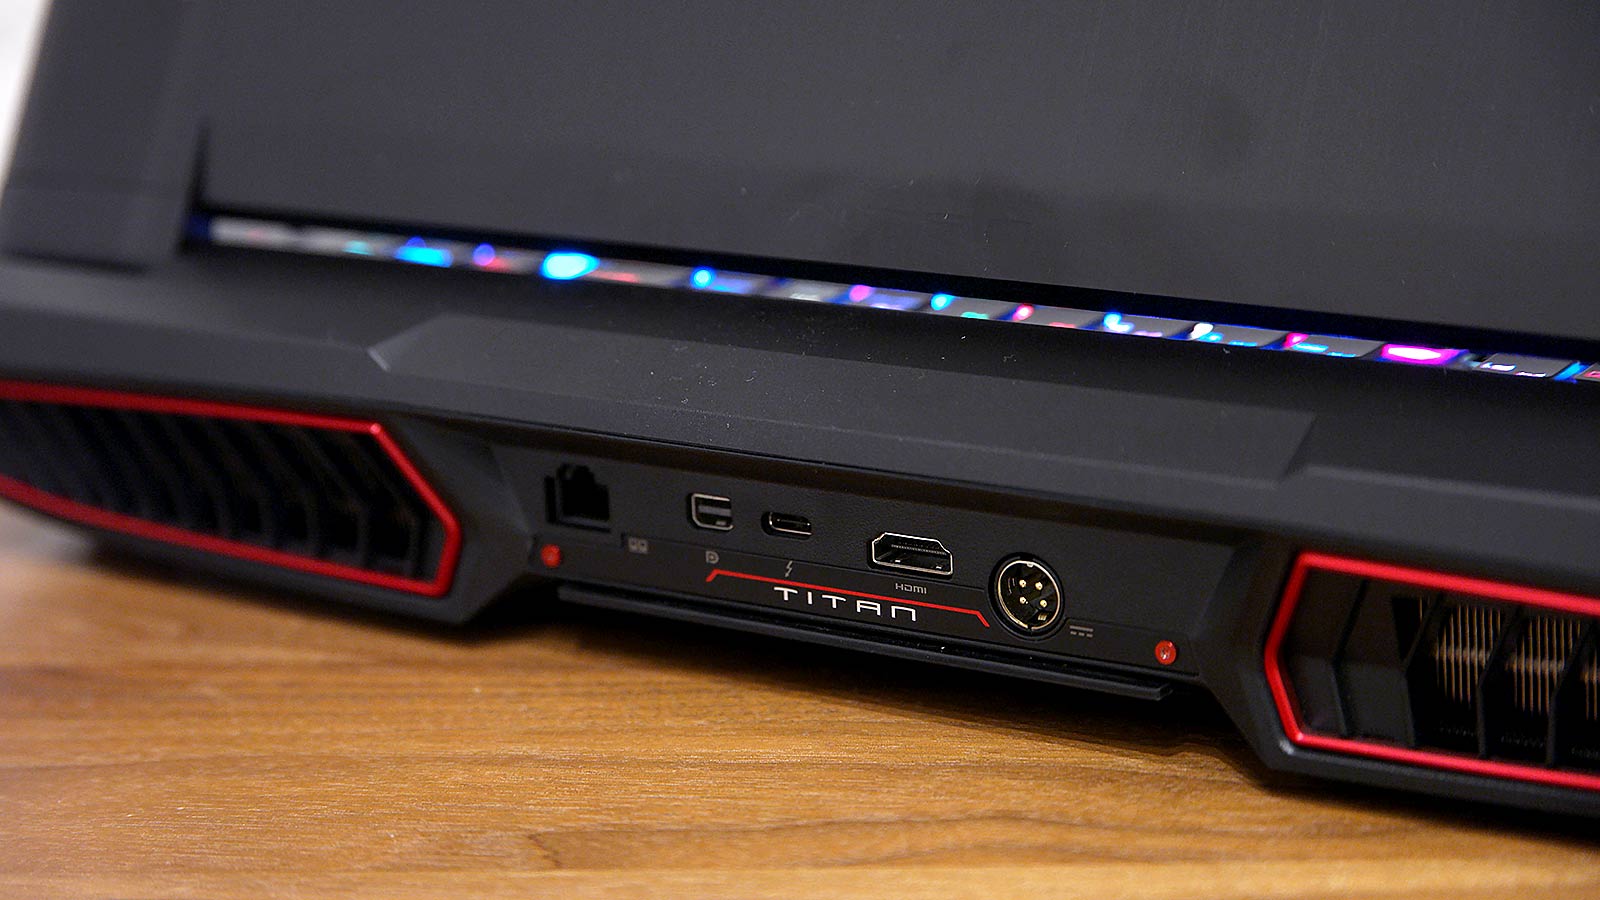 MSI GT75VR Titan Pro: The Gizmodo Review